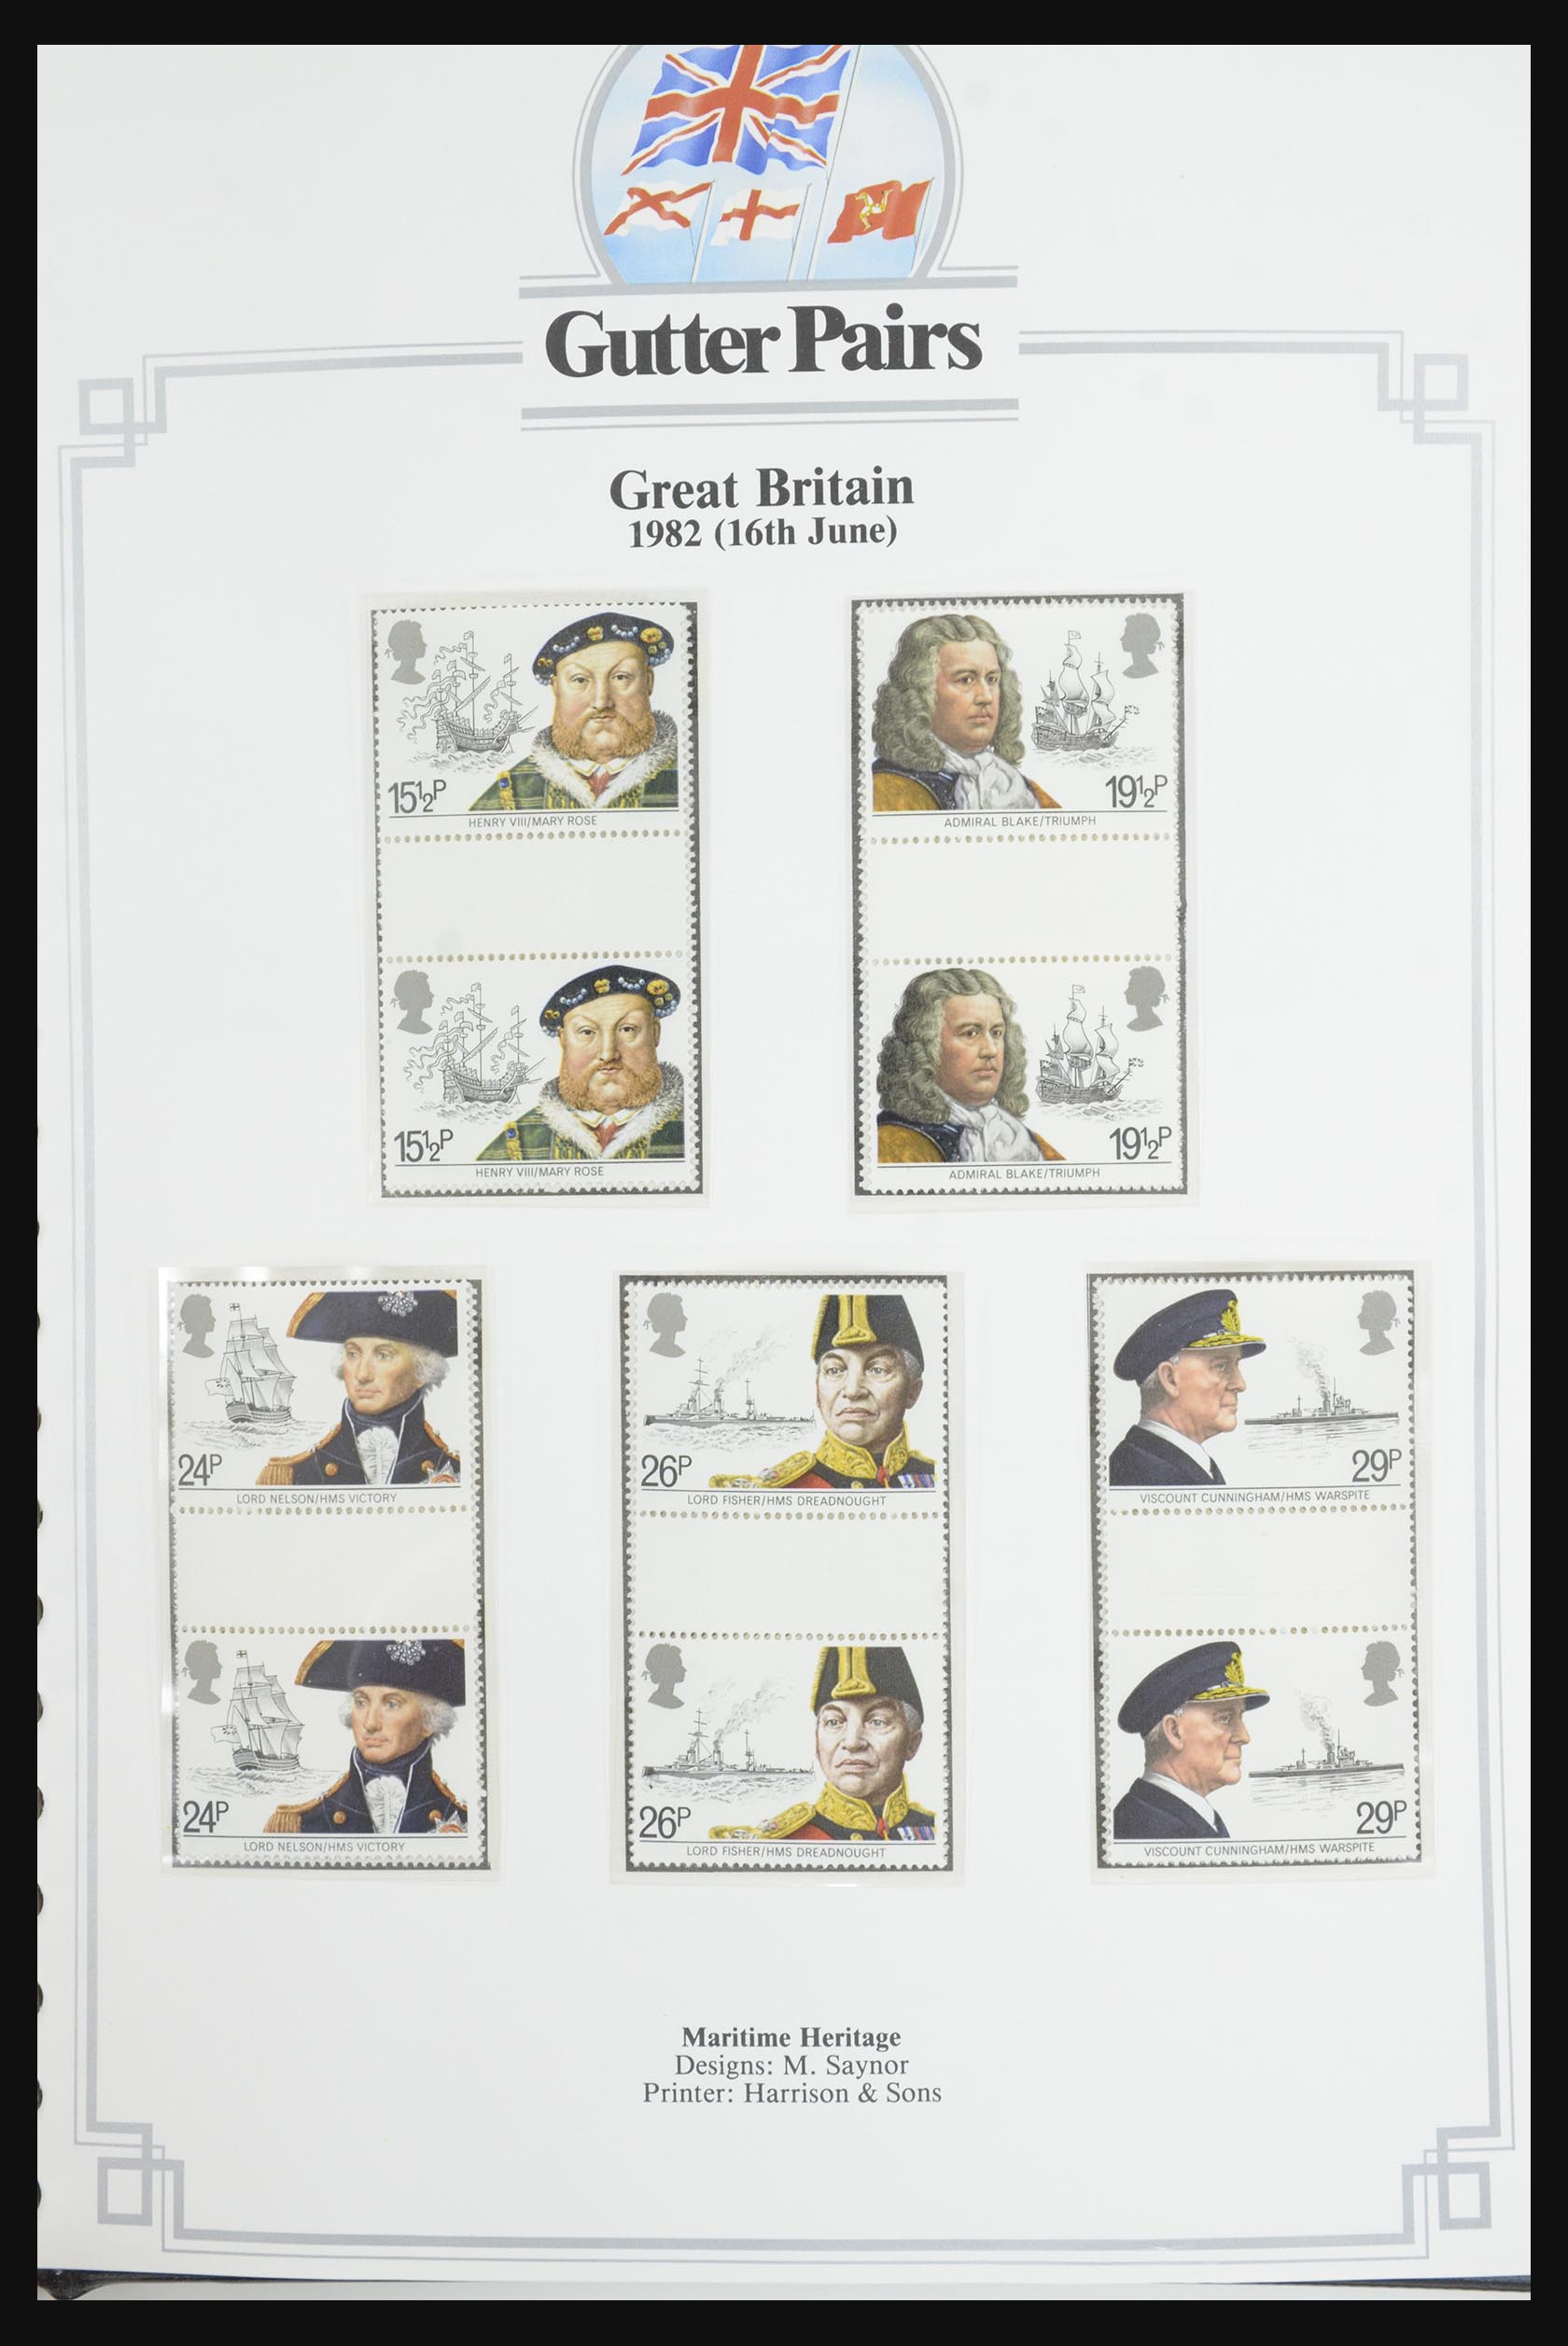 31717 030 - 31717 Great Britain gutterpairs 1976-1991.